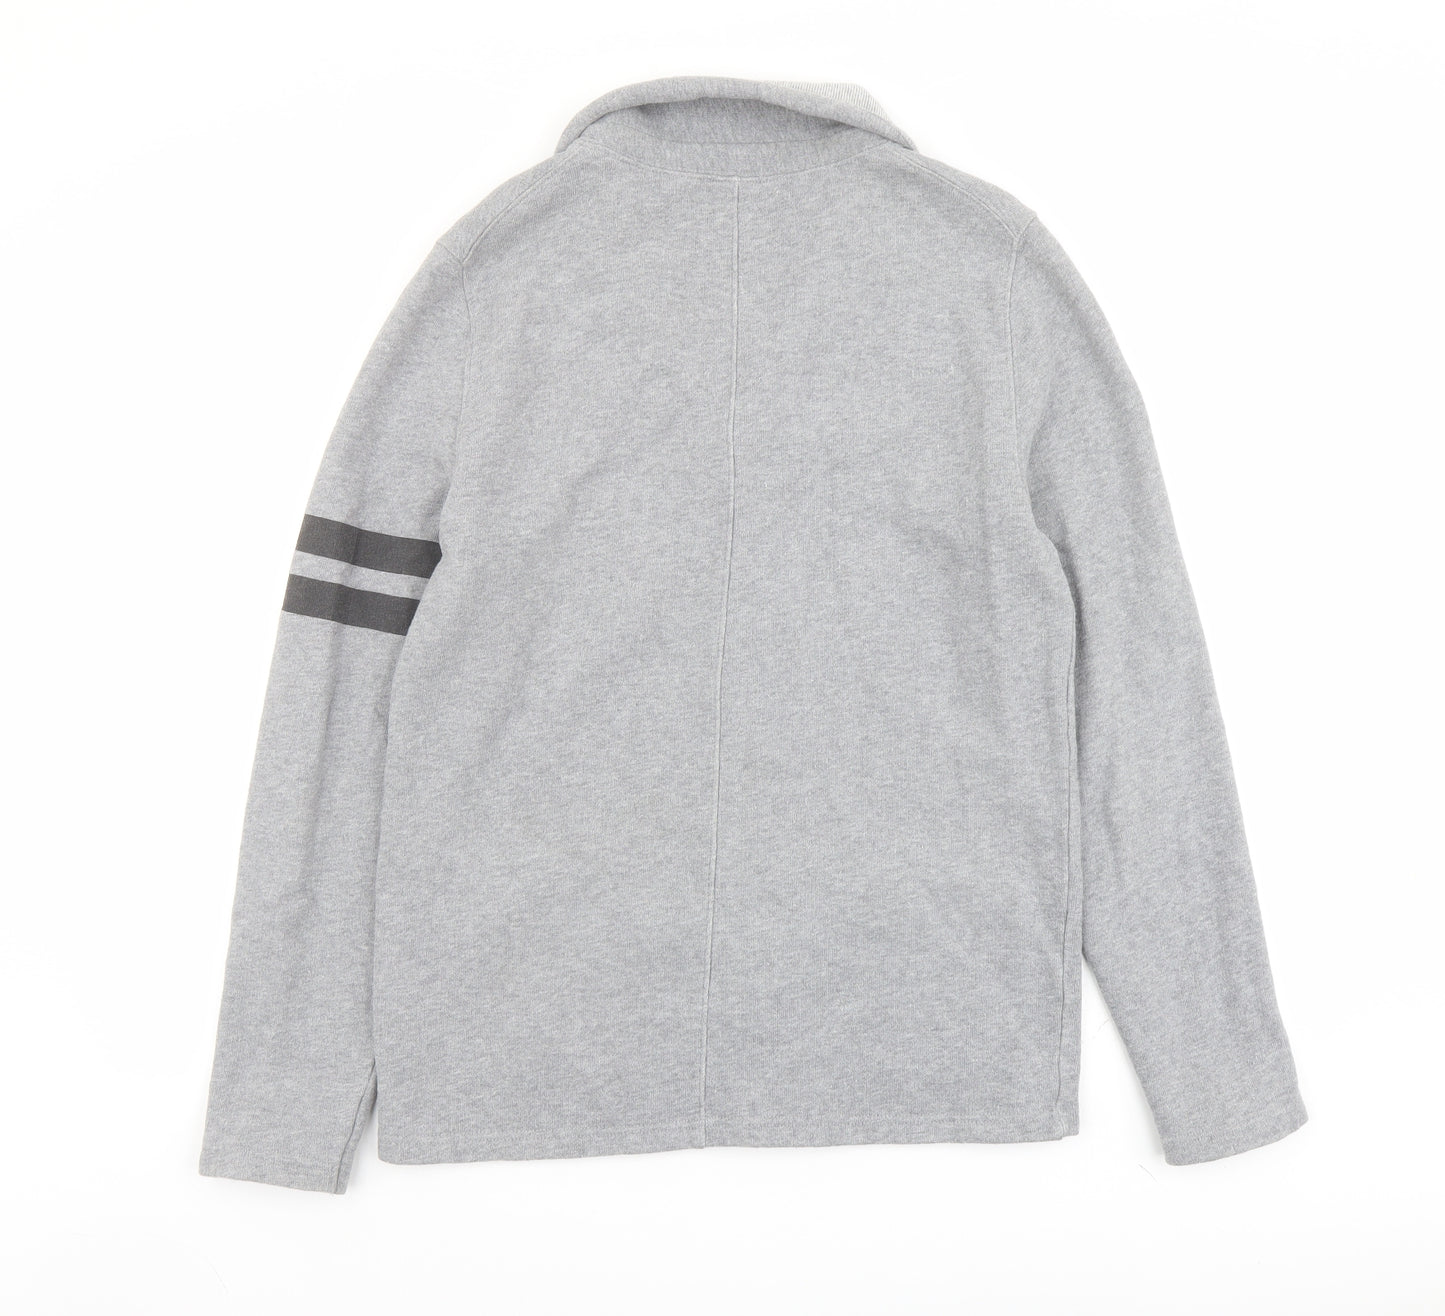 Gap Mens Grey Cotton Cardigan Sweatshirt Size M